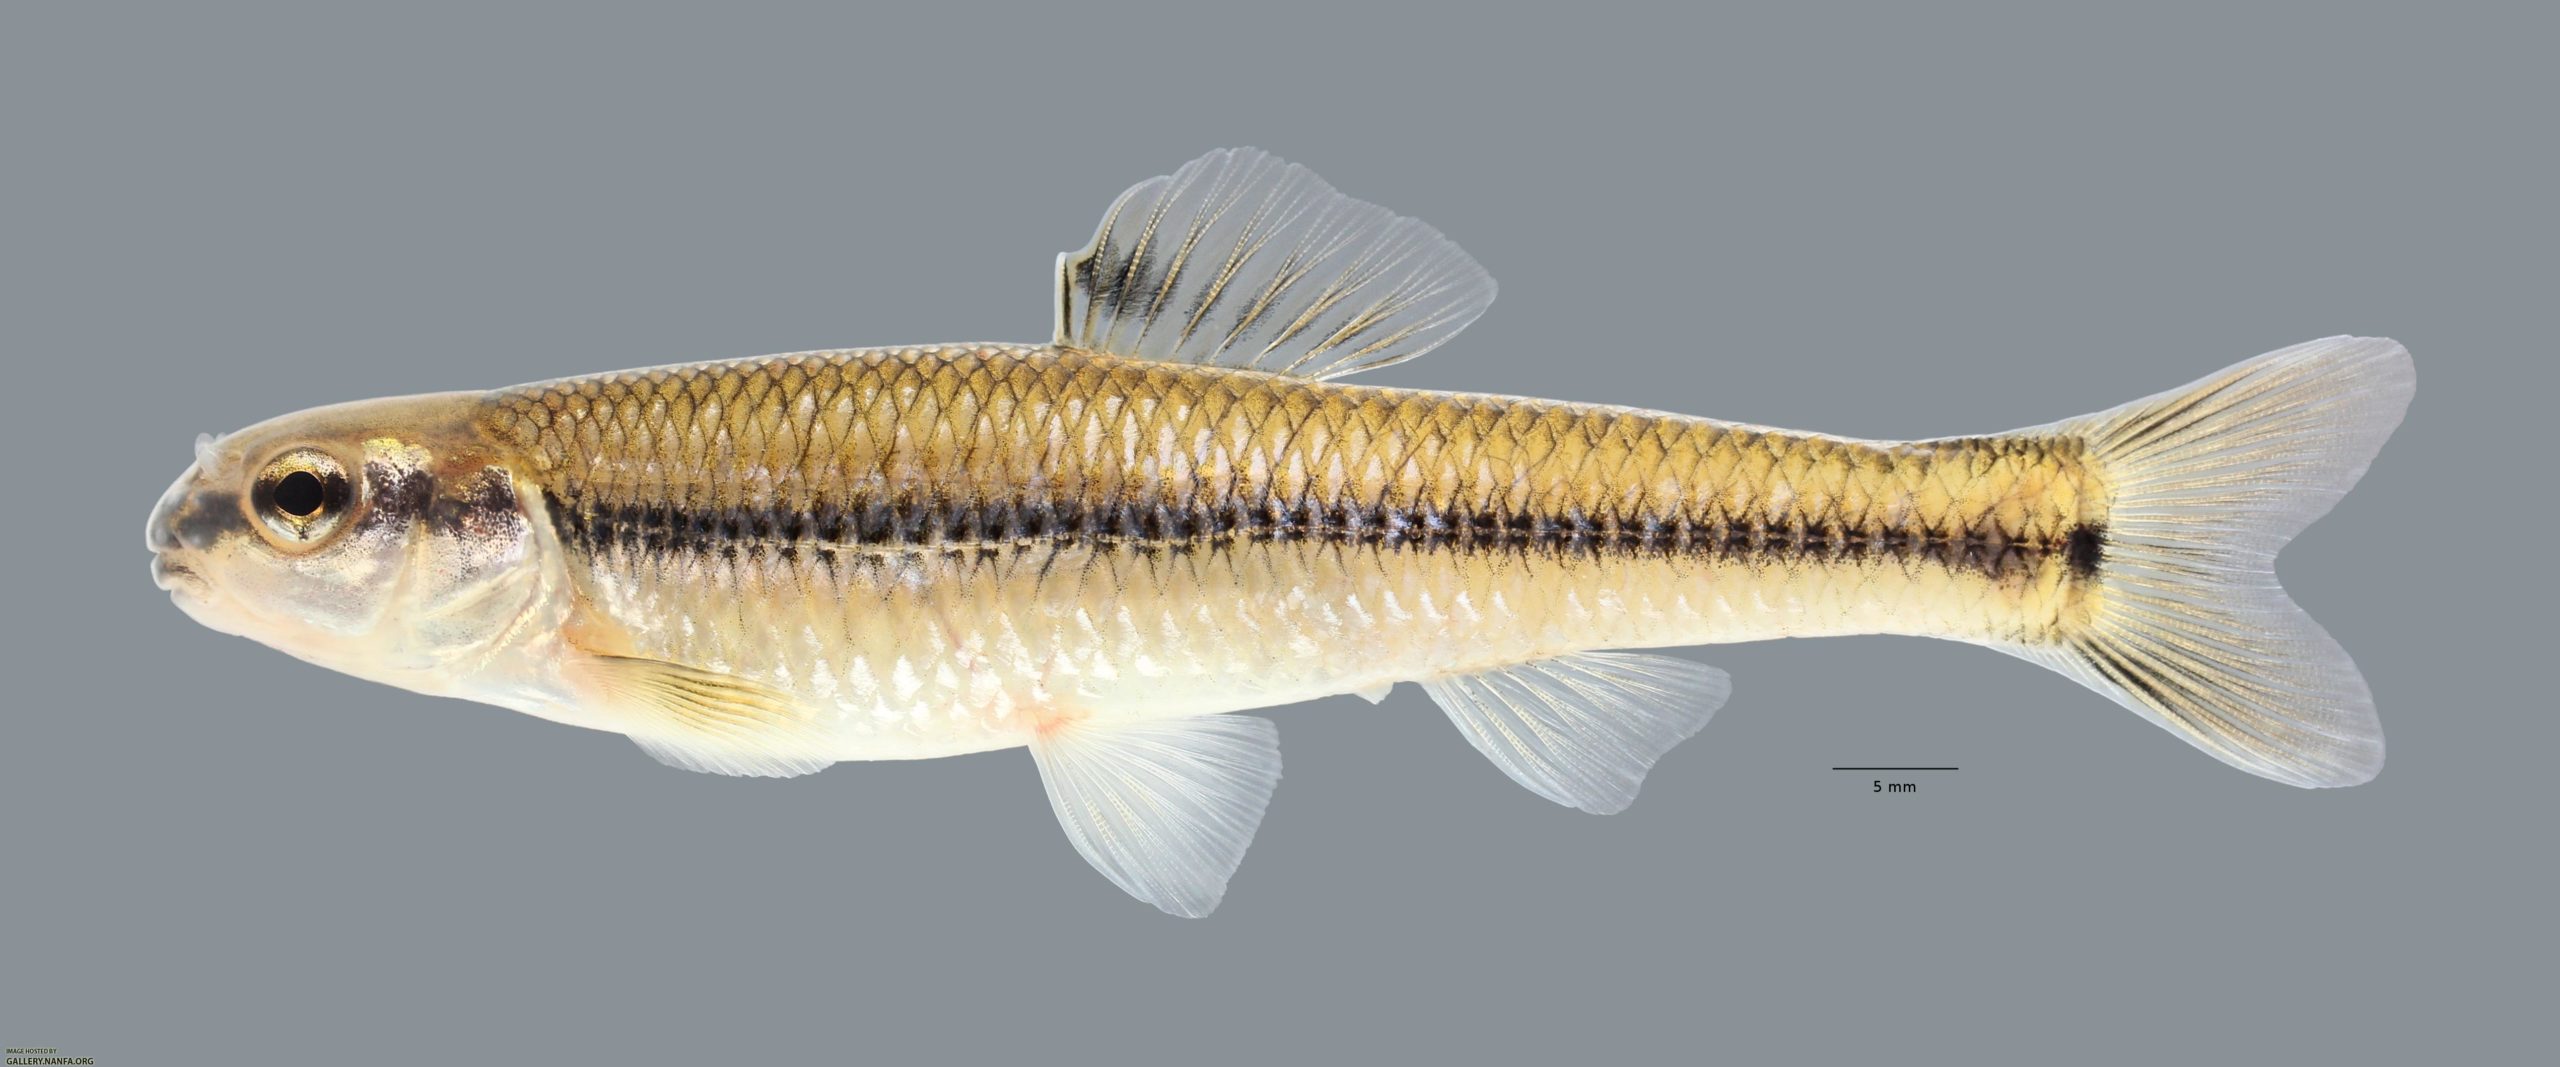 Bluntnose Minnow (Pimephales notatus) - Species Profile